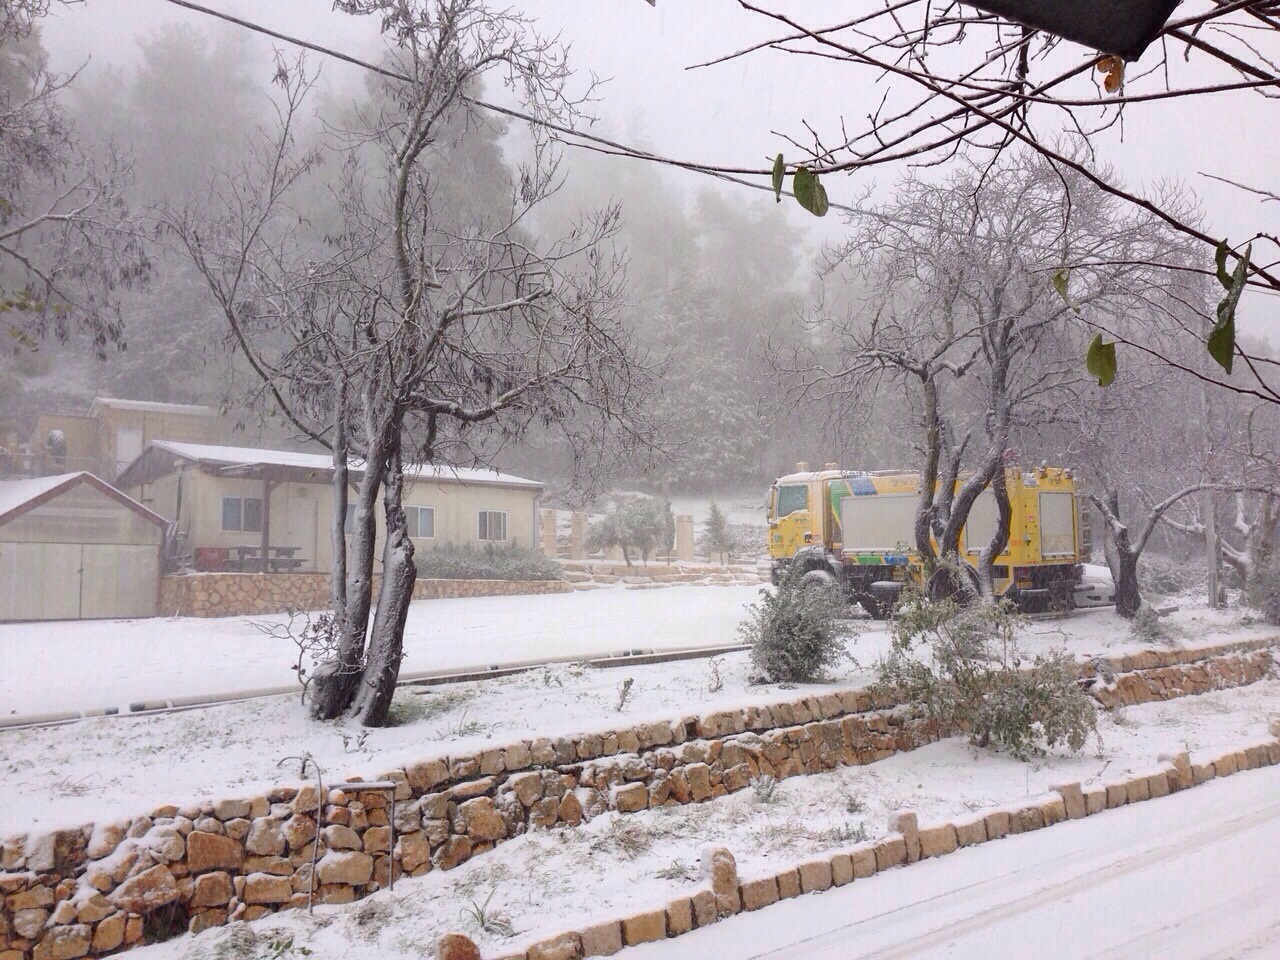  ККЛ ощищает от снега дорогу Маалот  - фото 4